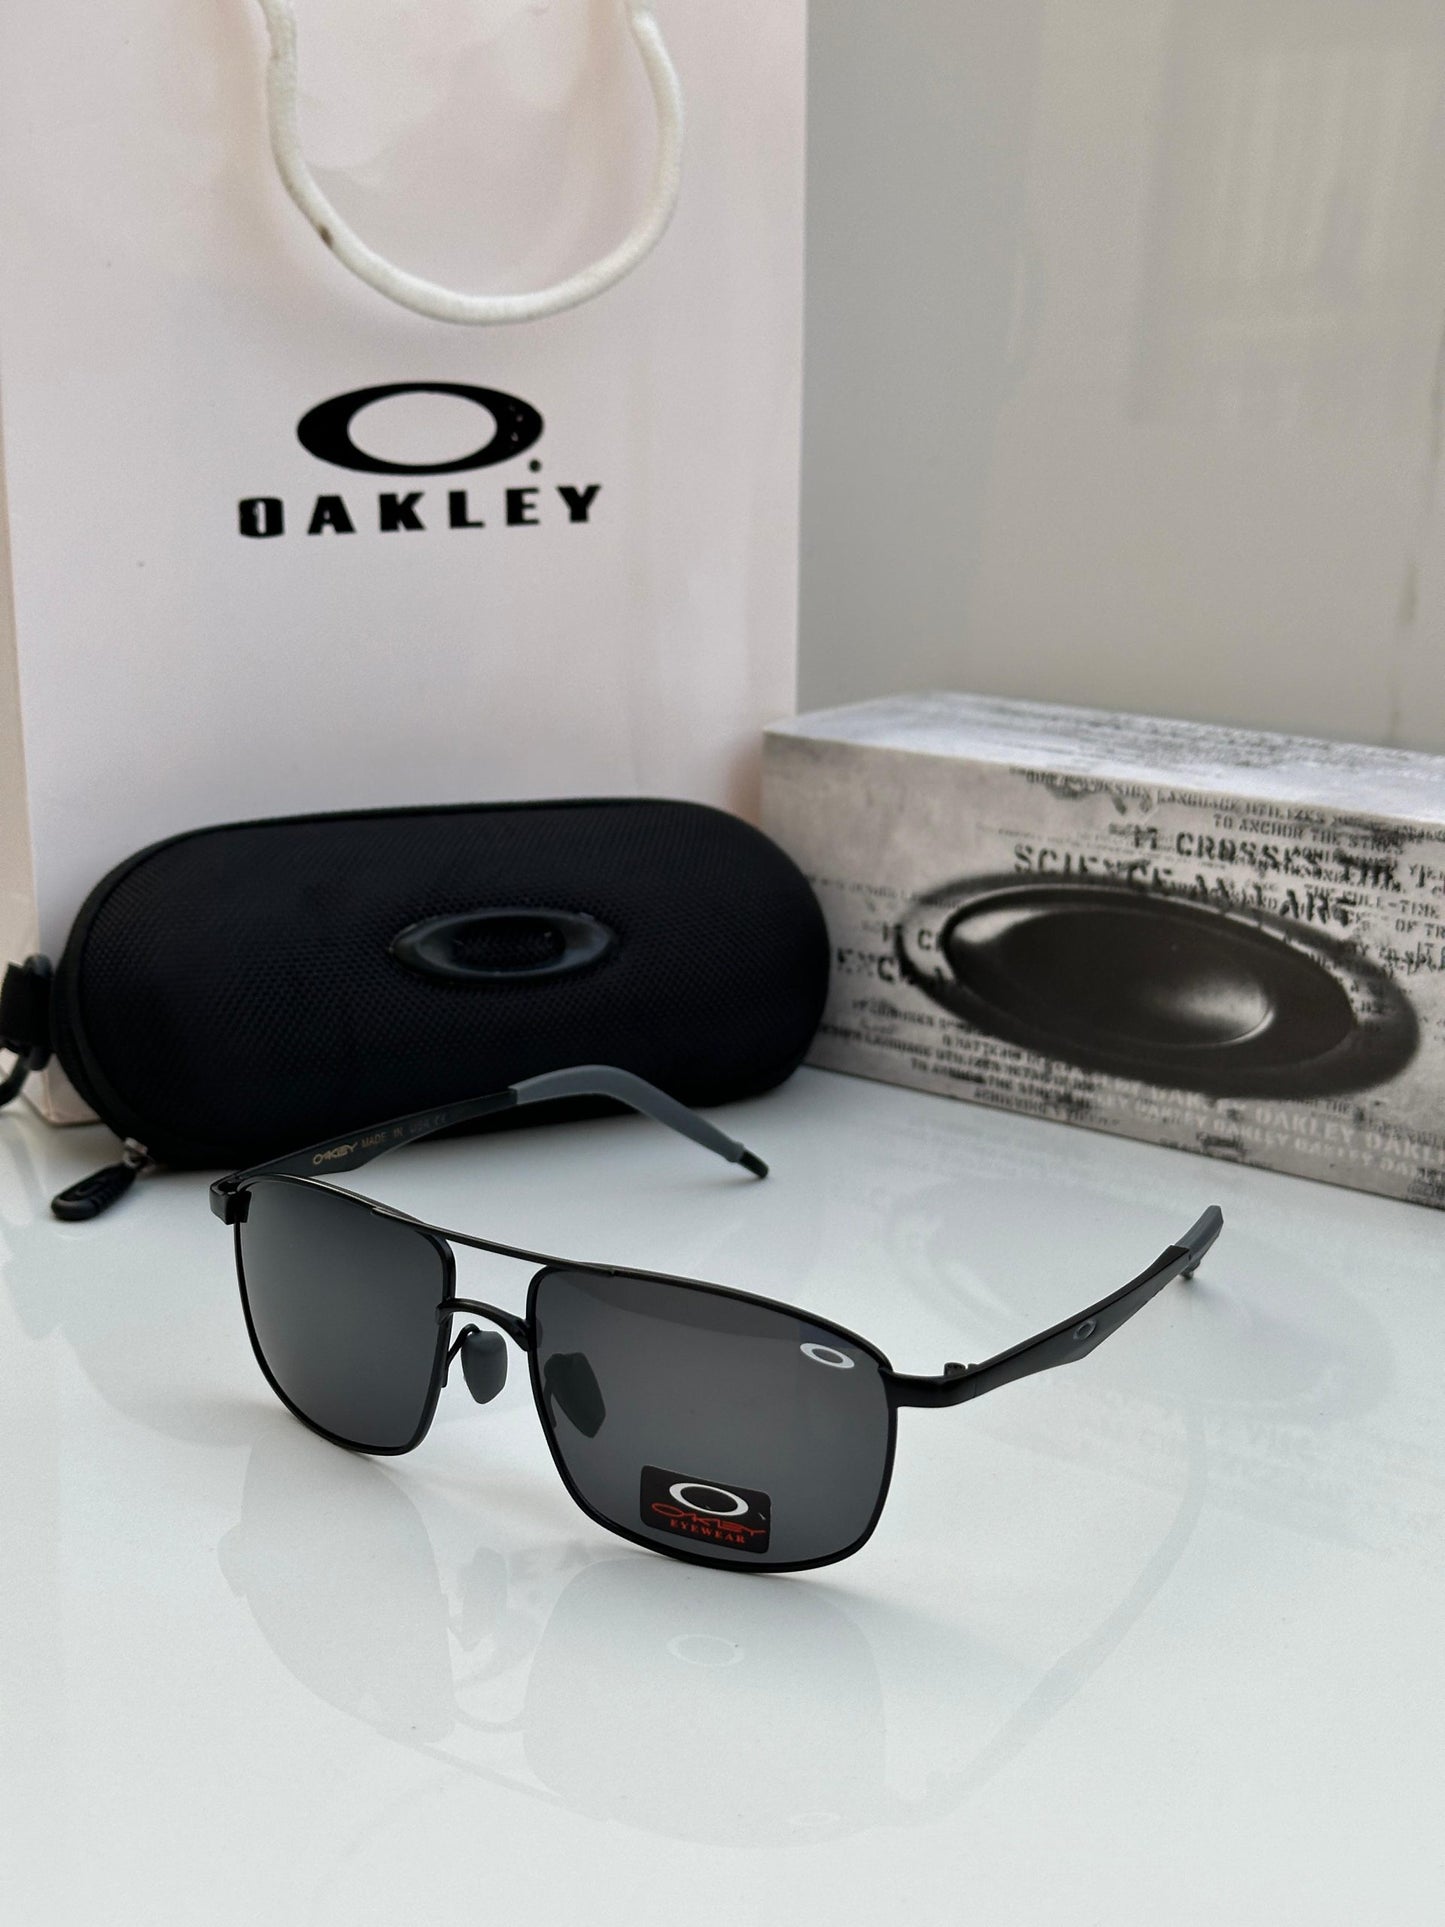 Oakley Black Color Glass Men's Sunglass for Men or Boy OAK-5485 Black Frame Gift Sunglass